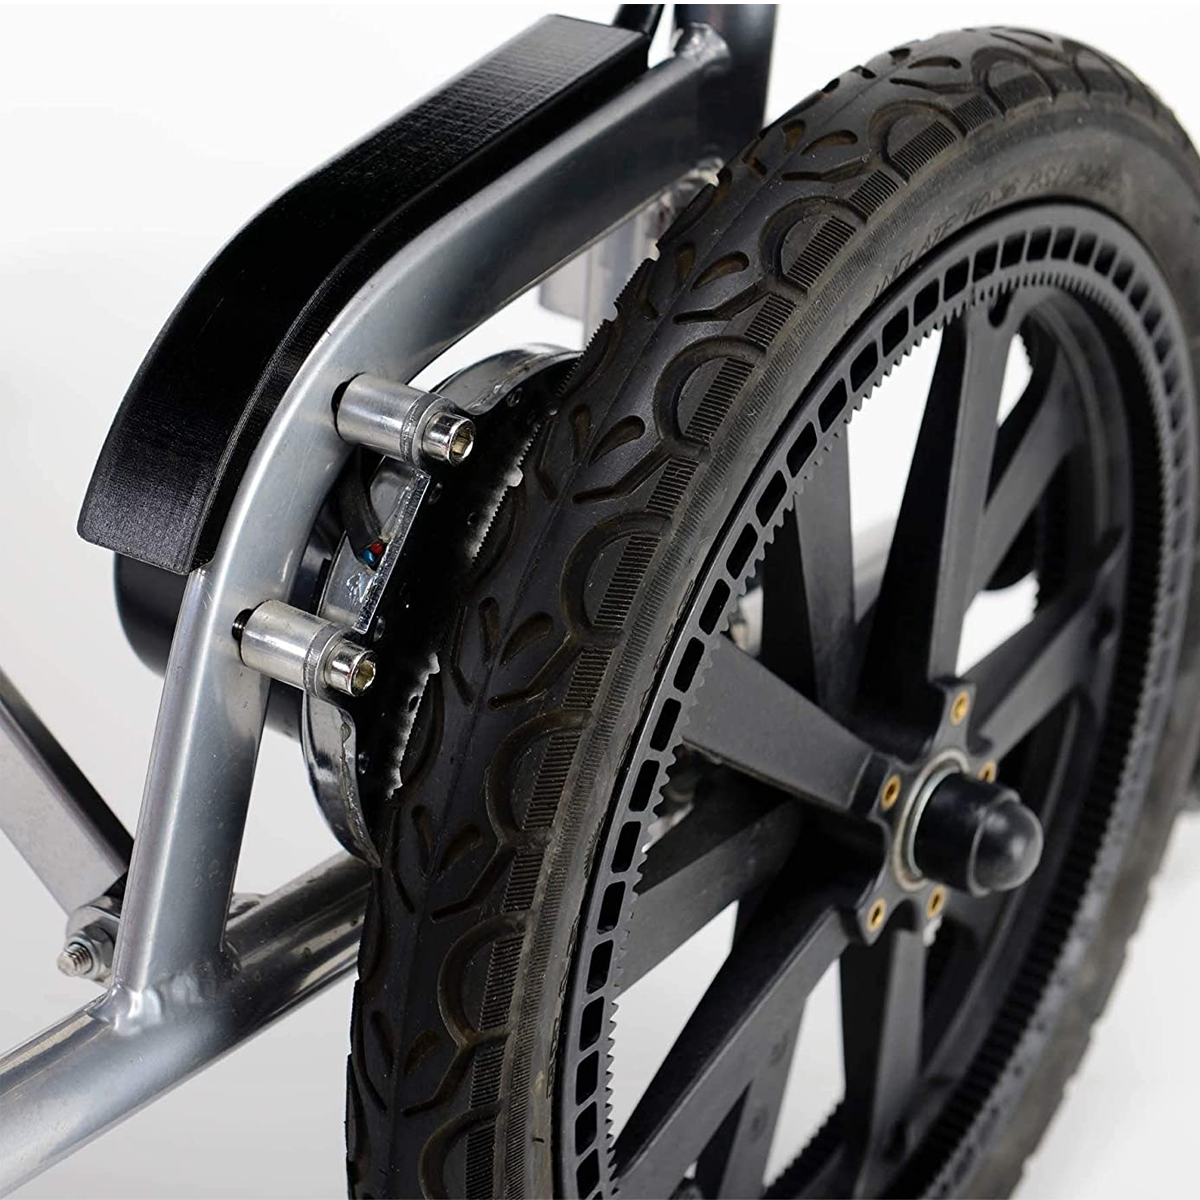 Electric Wheelchair Folding Motorized Power Wheelchairs, 20 Mile Driving Range